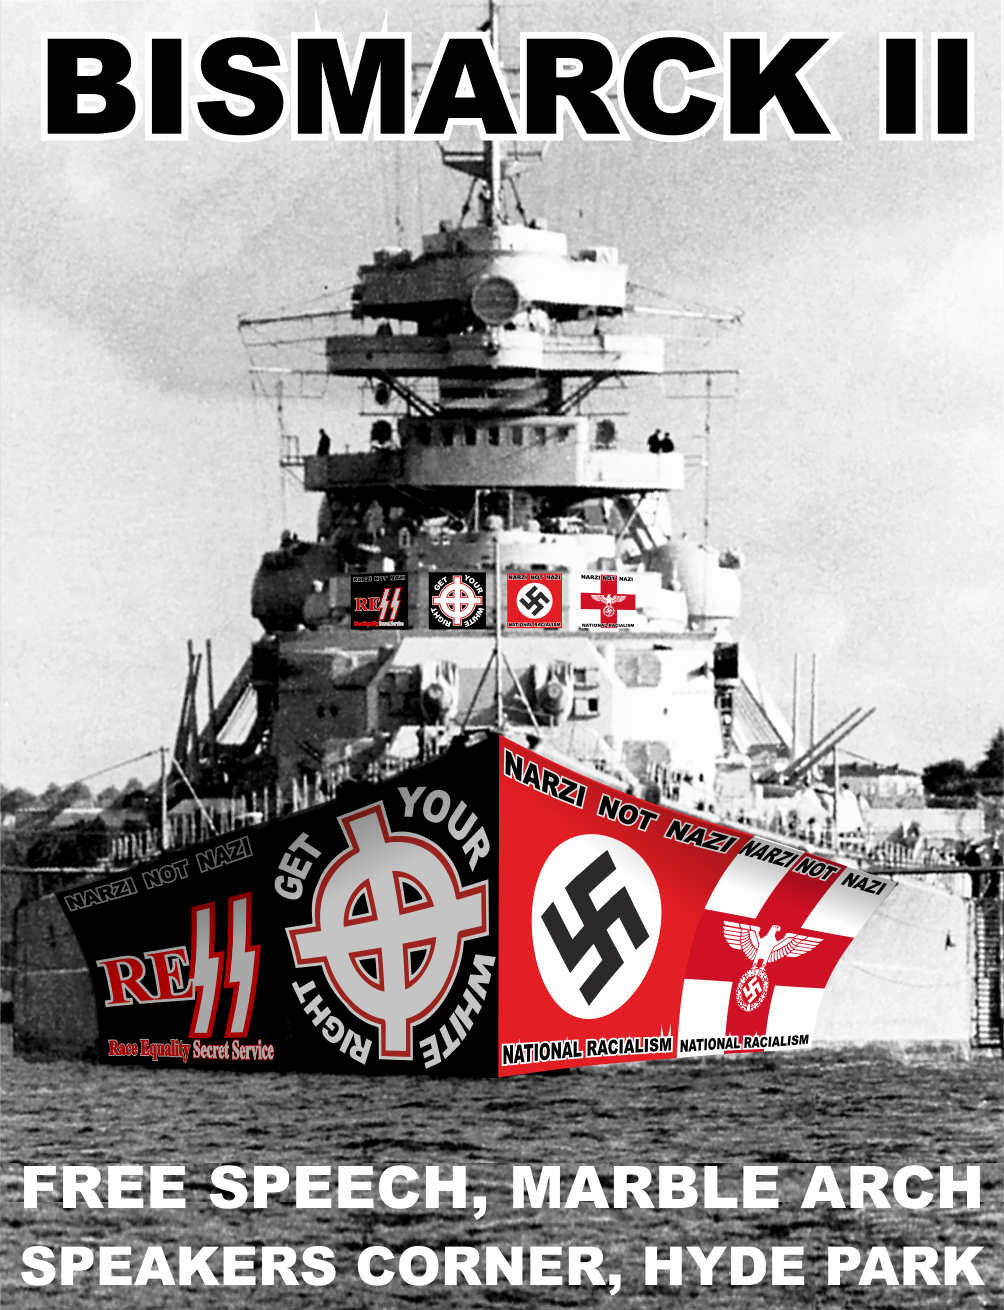 14 февраля спуск бисмарка. Дредноут бисмарк. Стикеры бисмарк. Bismarck 1939. Бисмарк линкор 14 февраля.